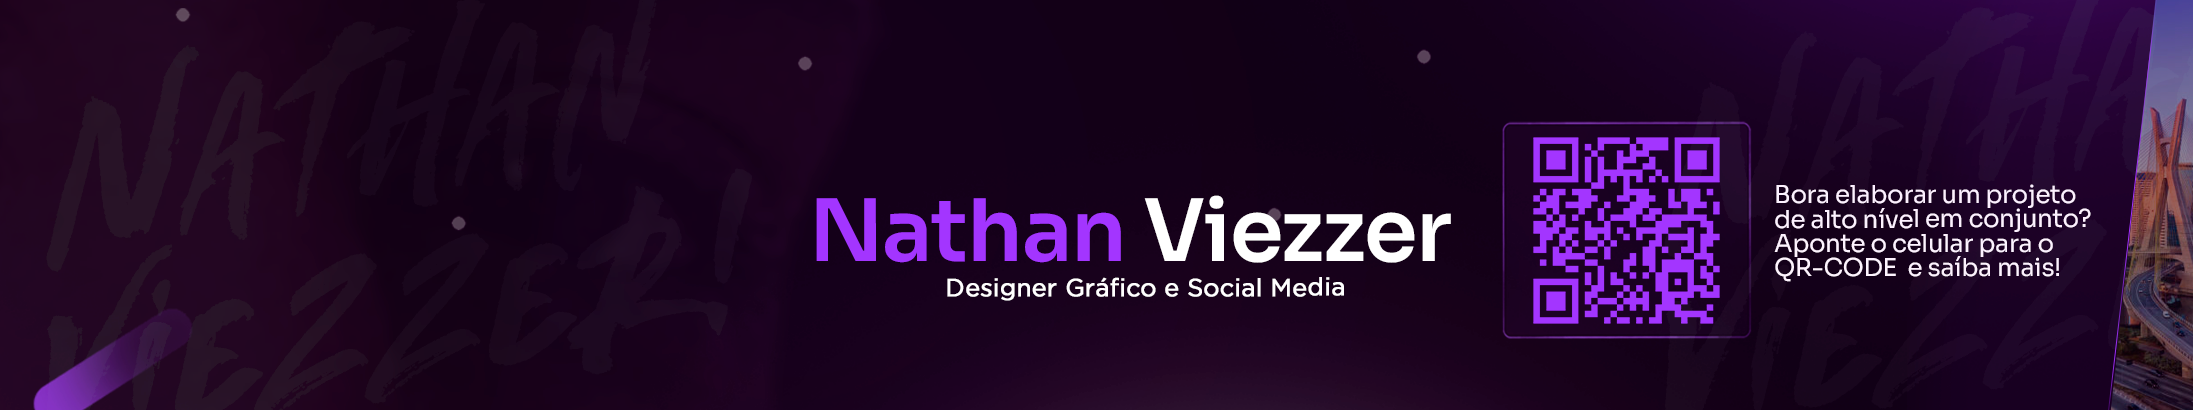 Nathan Viezzer のプロファイルバナー